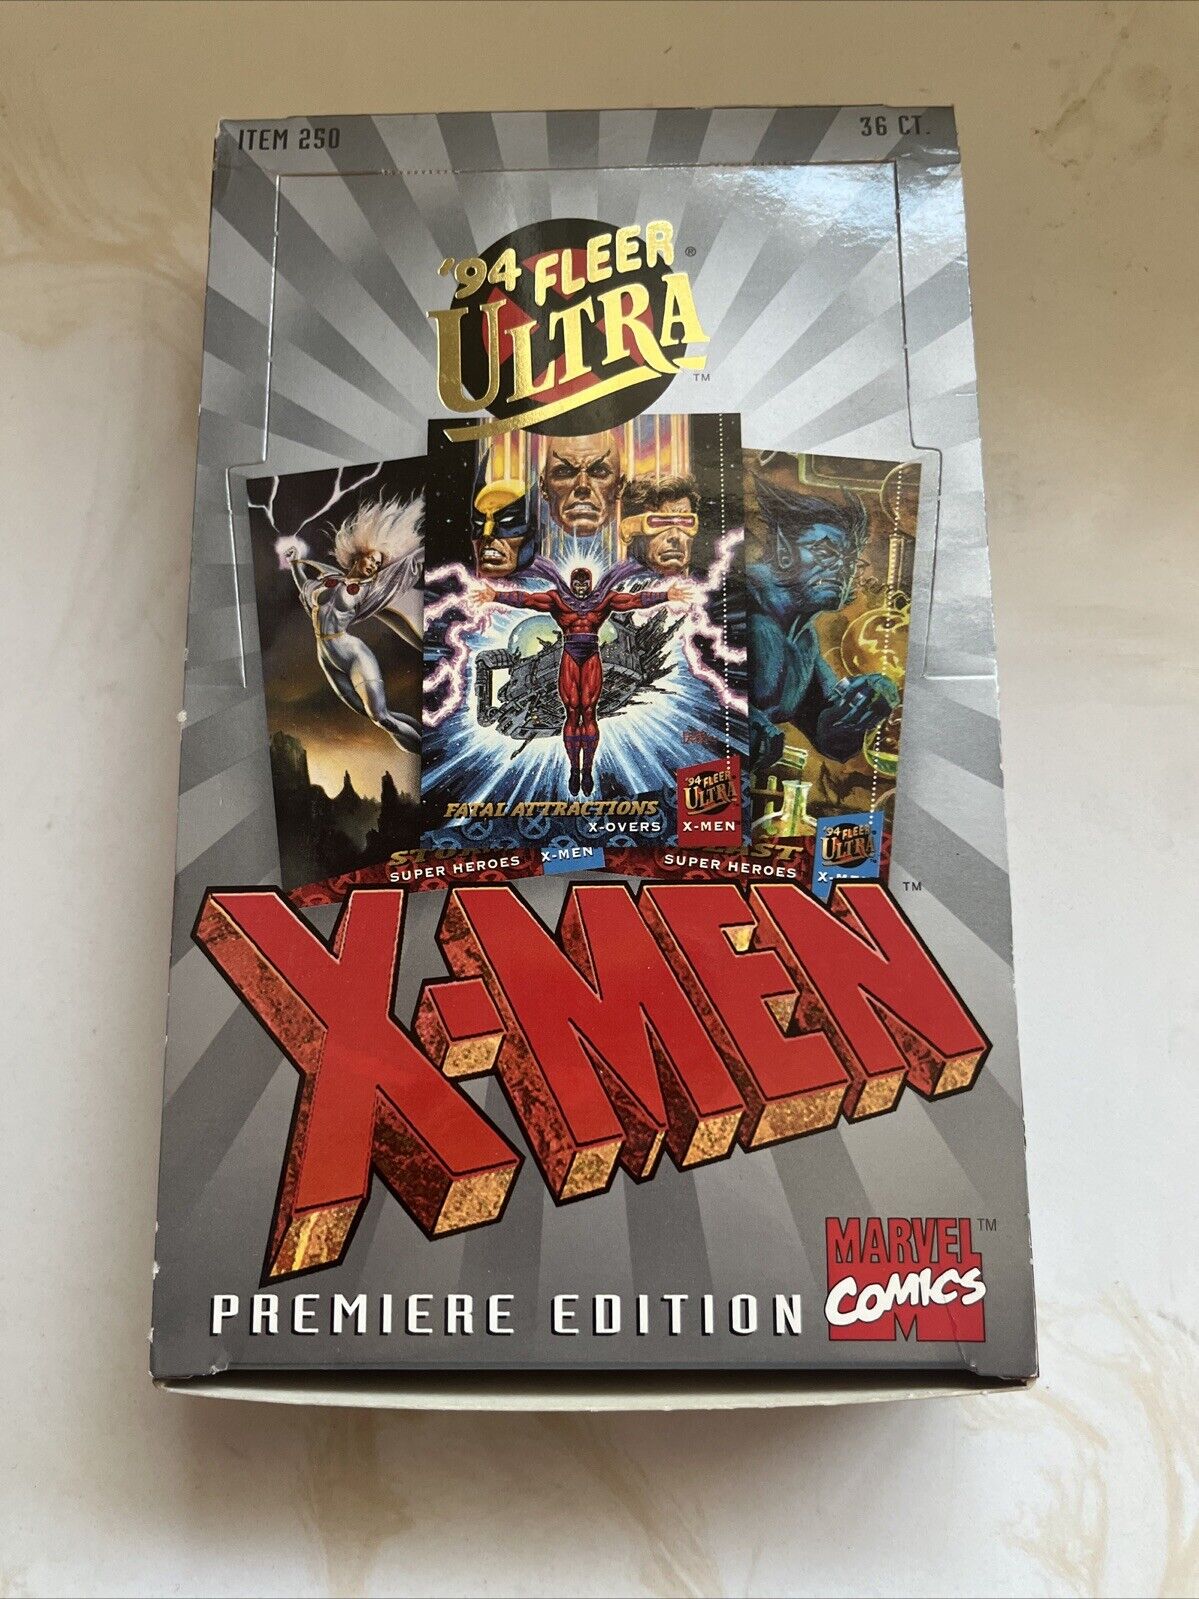 1994 Fleer Ultra X-Men Premium Edition